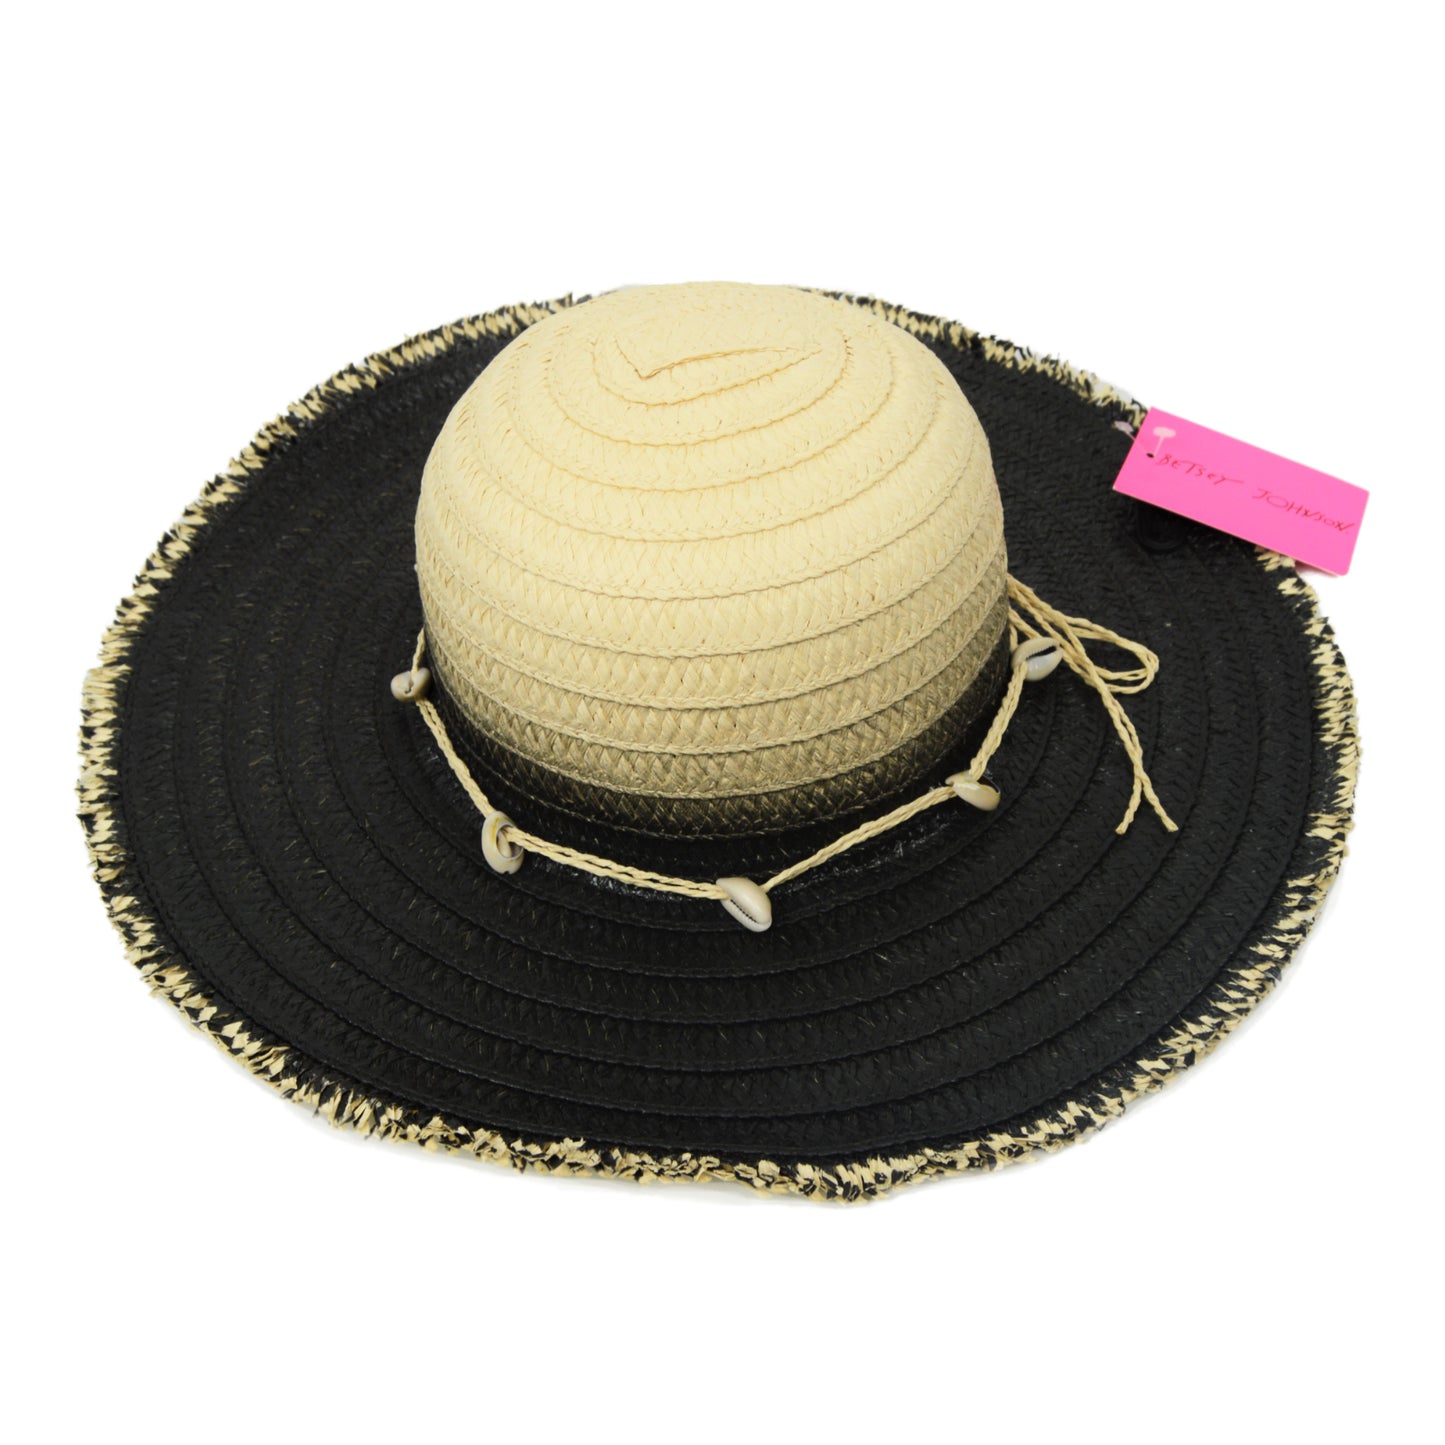 Betsey Johnson Women's Ombre Oasis Beach Floppy Hat